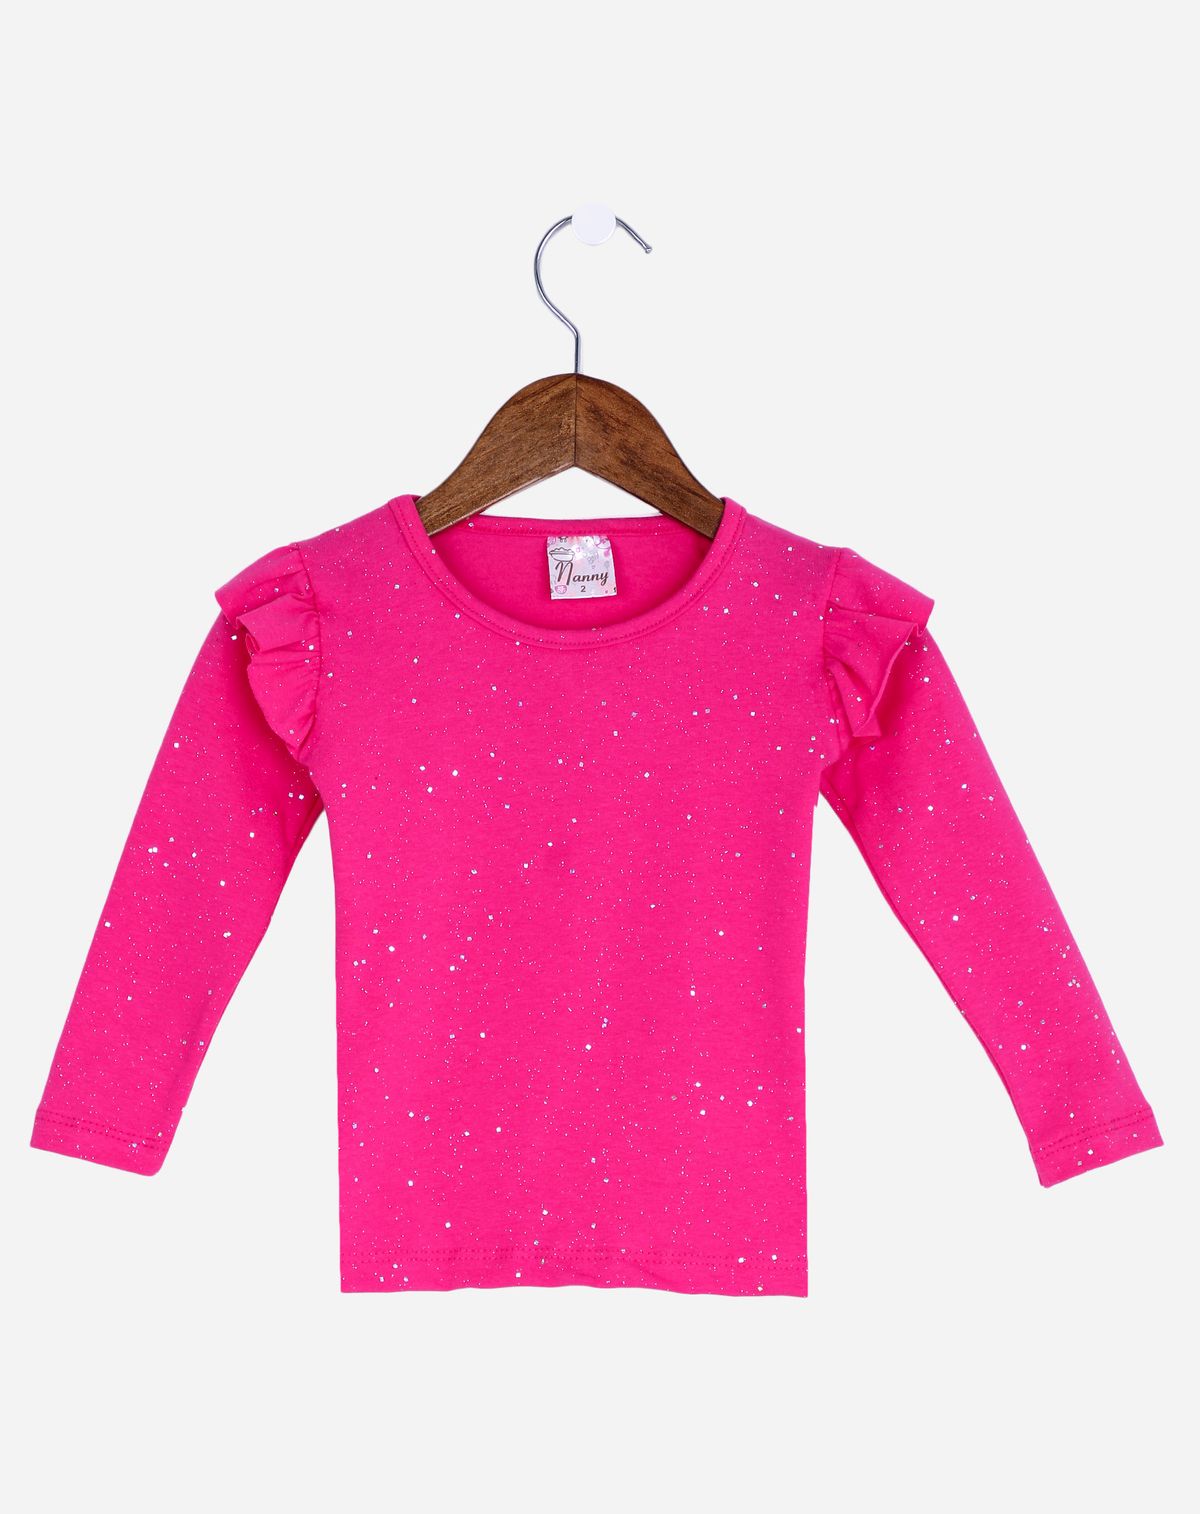 699140001-camiseta-manga-longa-infantil-menina---tam.-1-a-3-anos-pink-1-a55